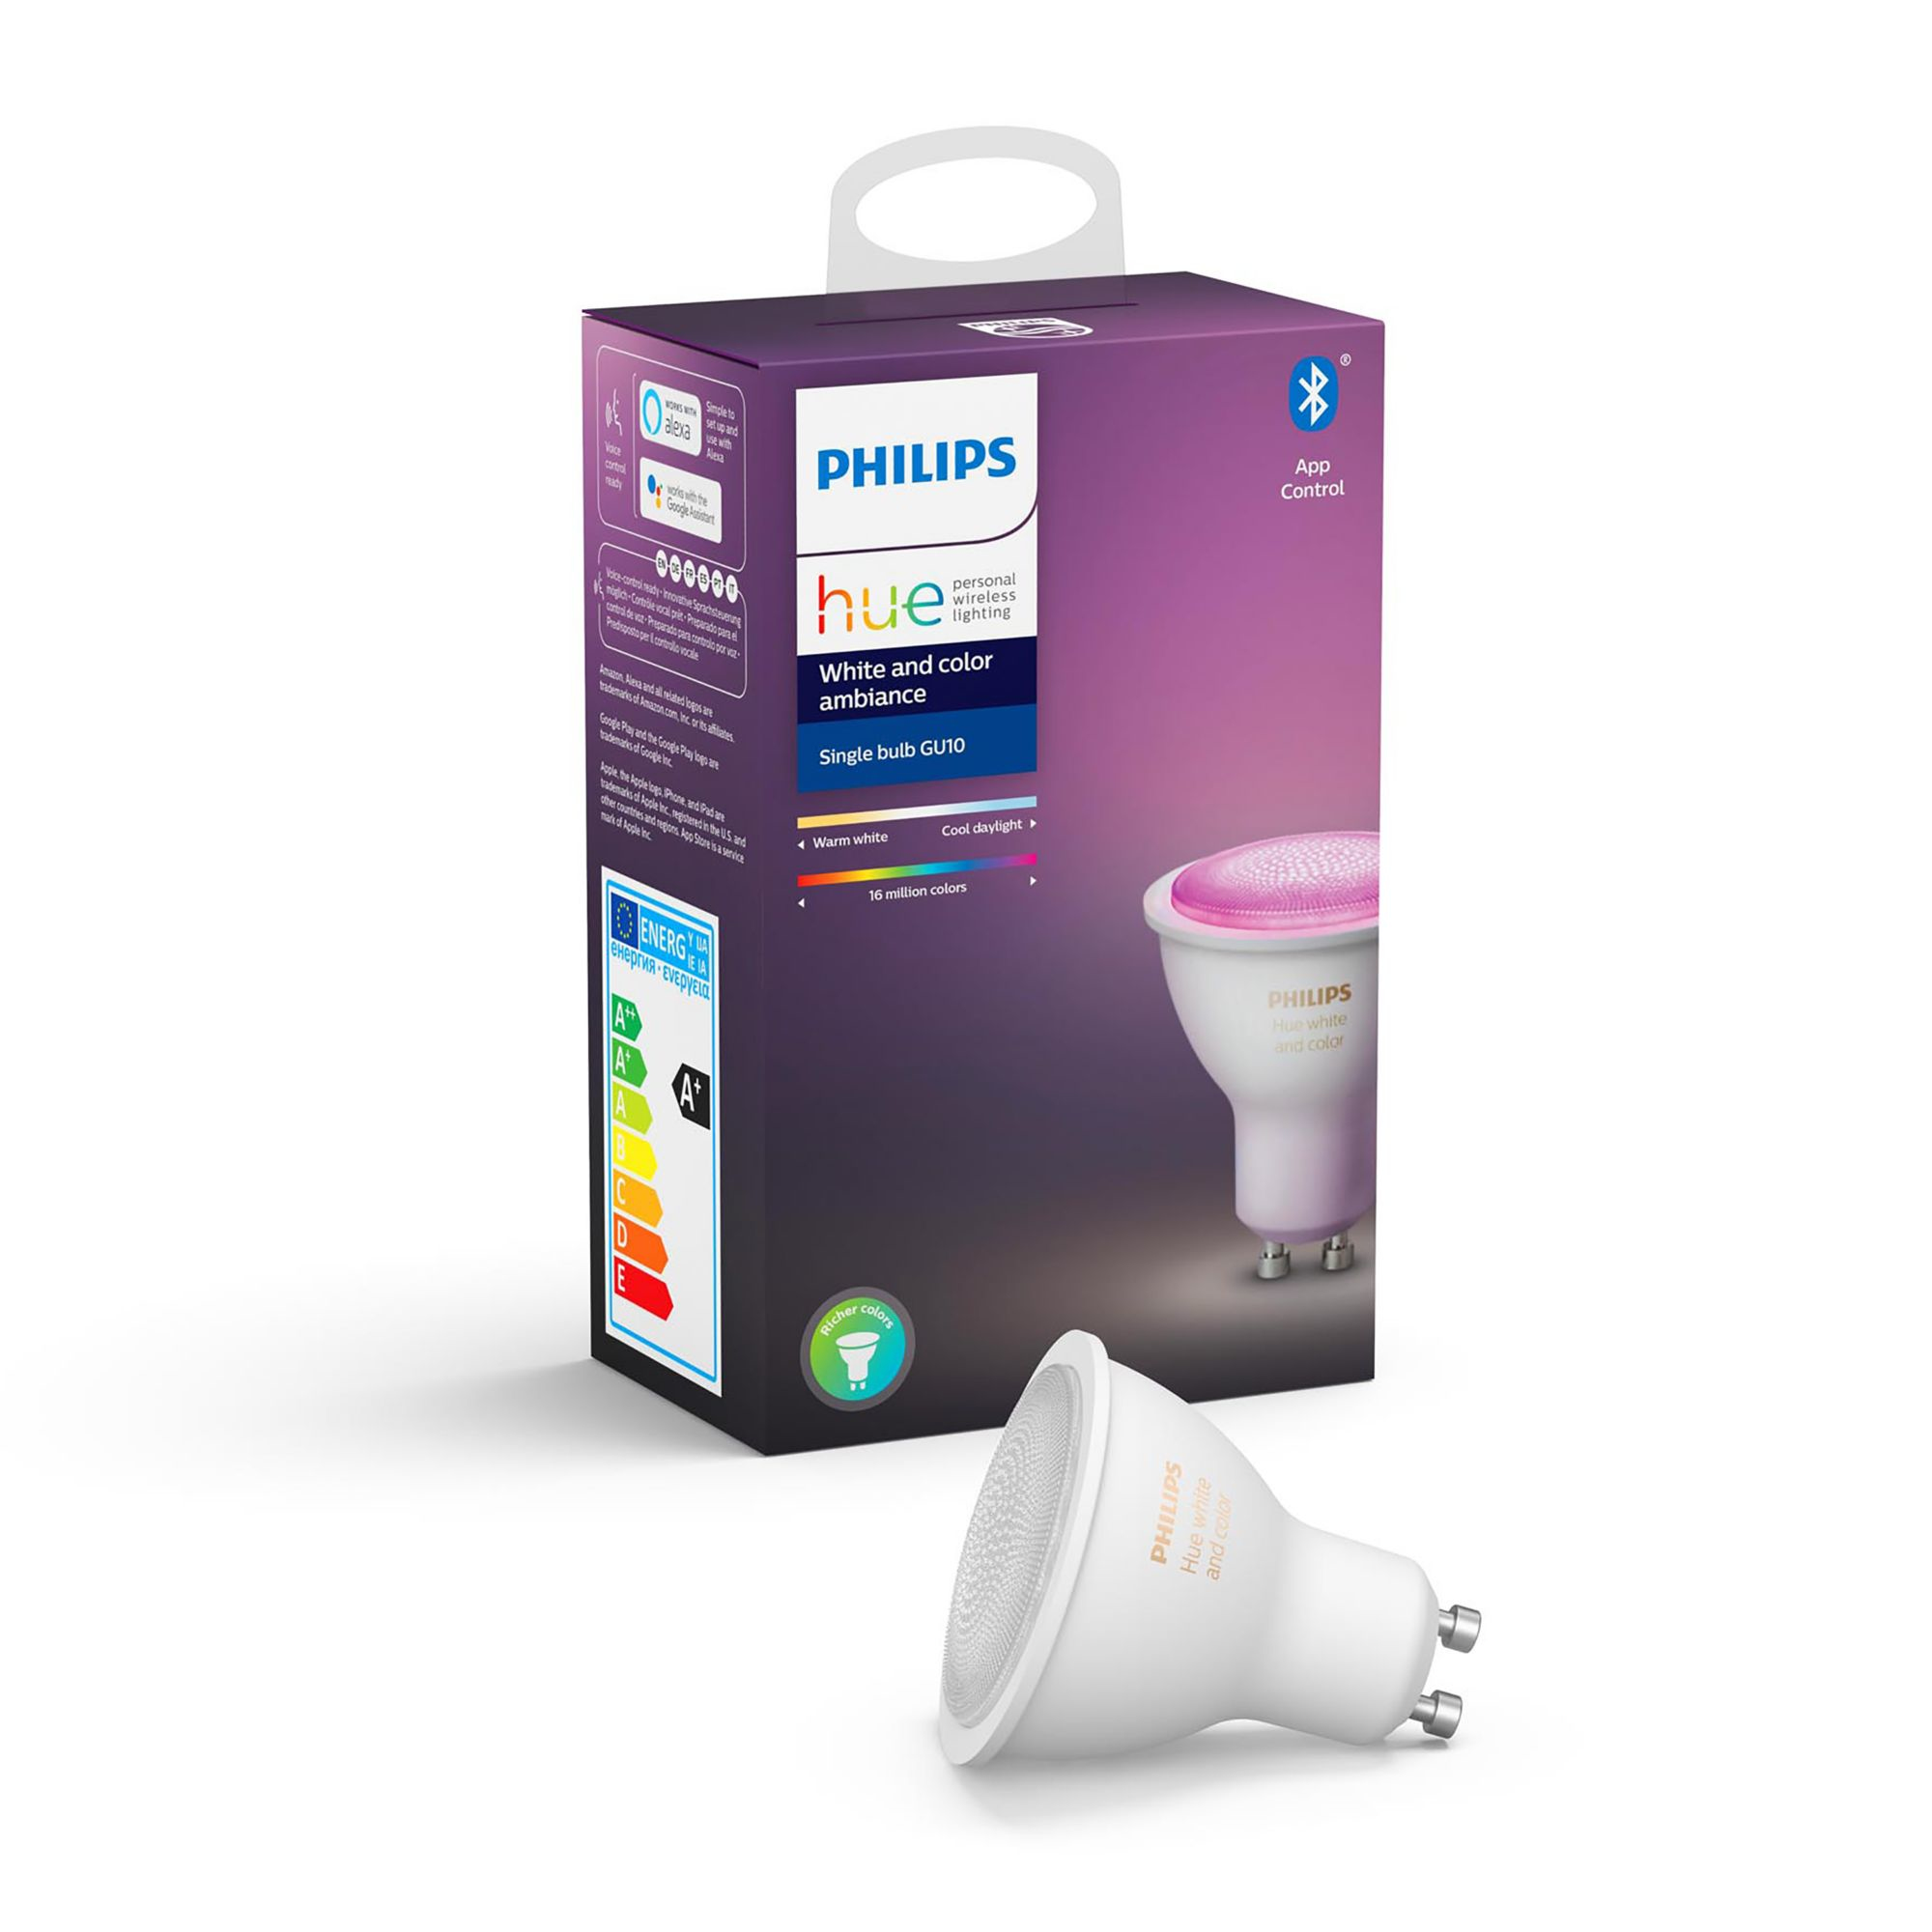 Philips Hue White and color ambiance bombilla led gu10 5.7w rgb inteligente ambiental con bluetooth luz blanca y compatible alexa google home 57